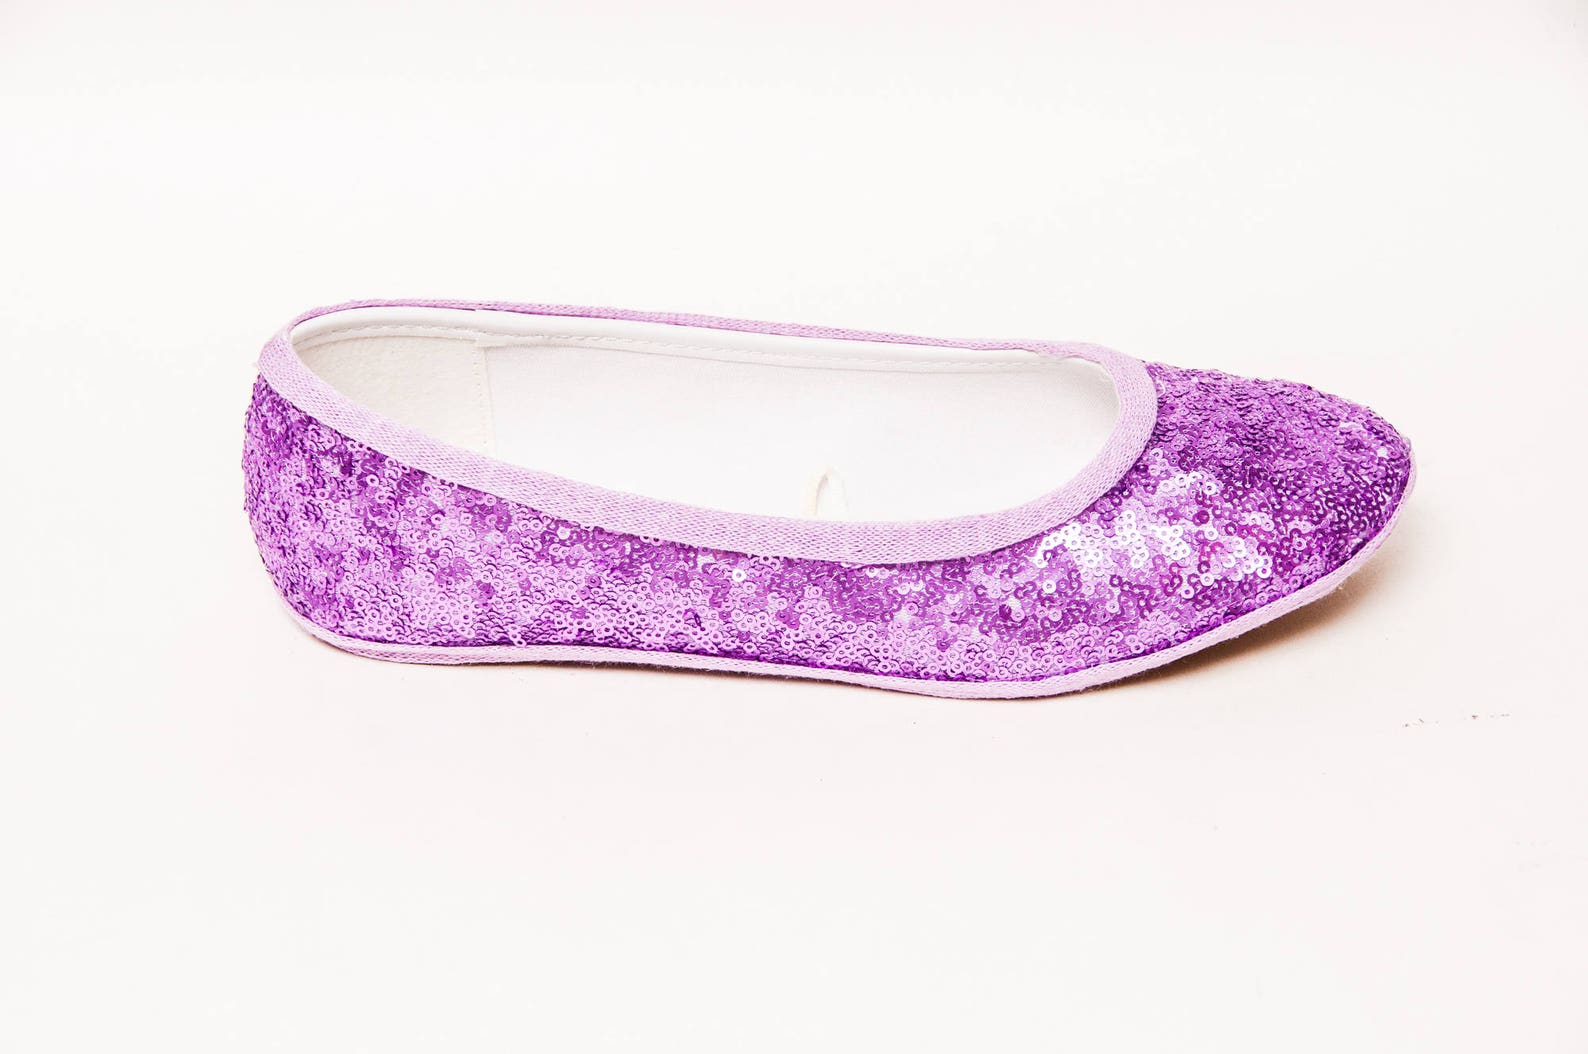 sequin - lilac purple slipper ballet flats custom shoes